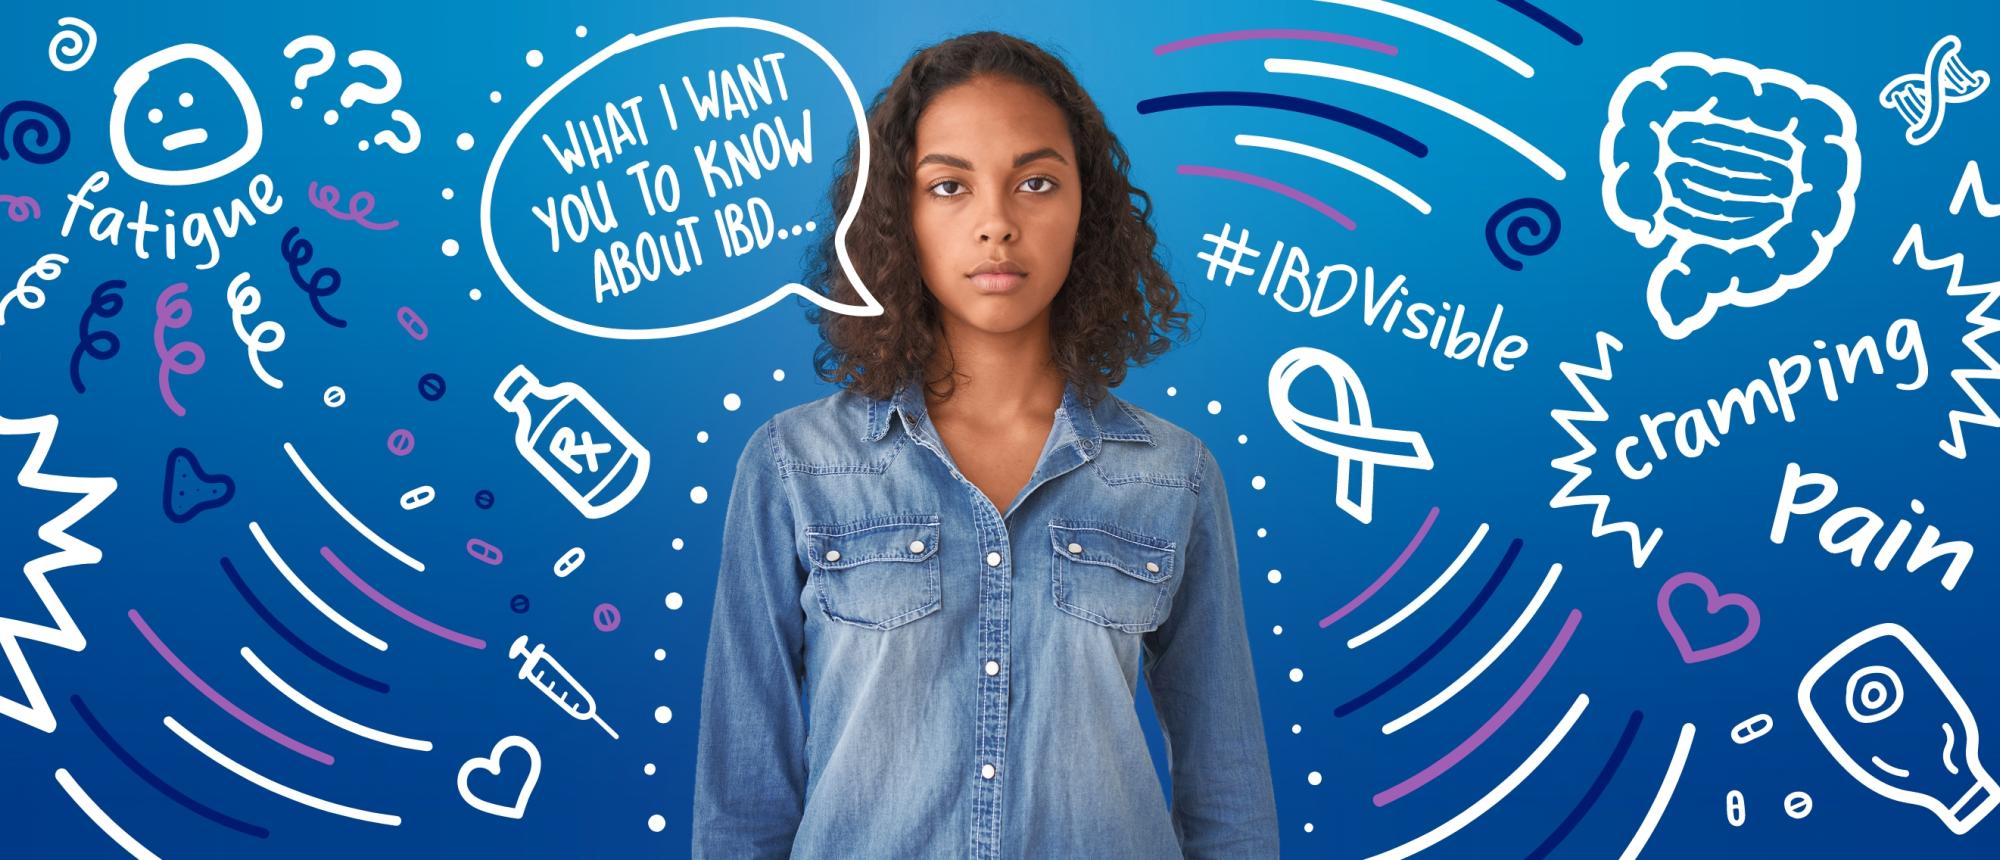 Awareness Week 2021 homepage image - girl with graffiti text displaying symptoms of IBD